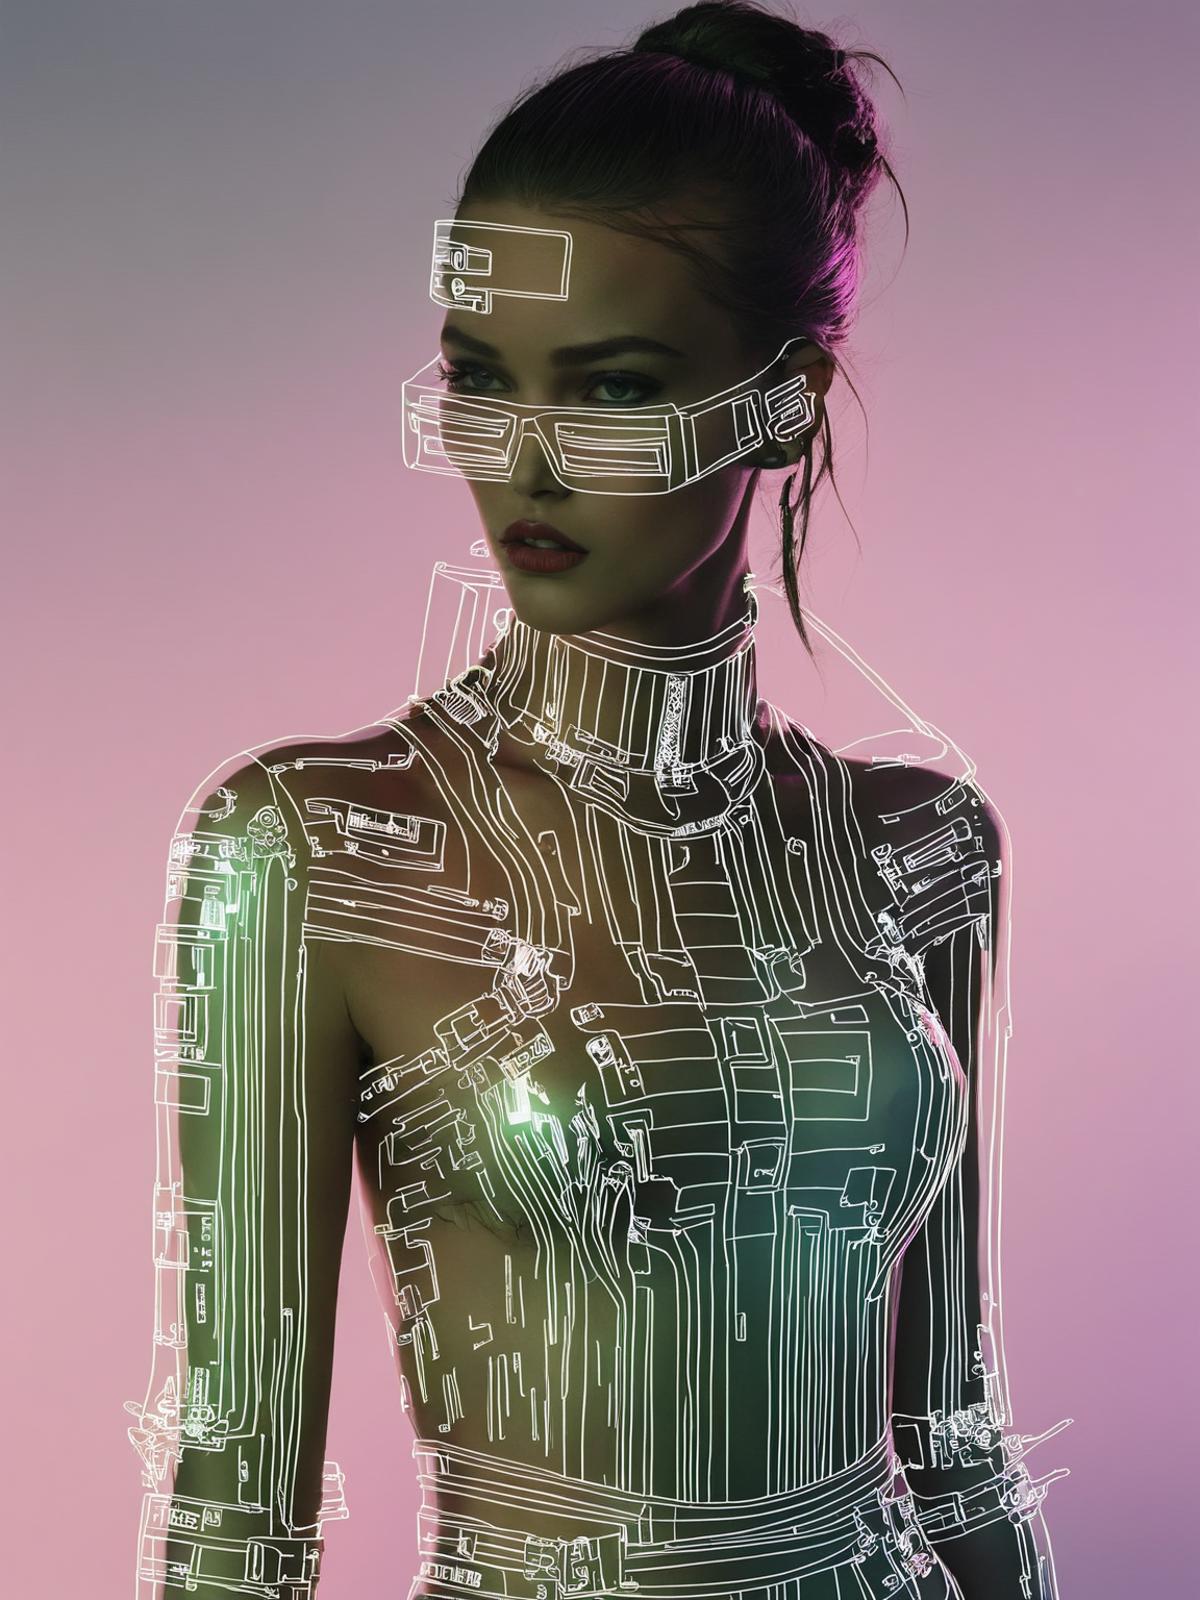 AI model image by Lara_De_Martin